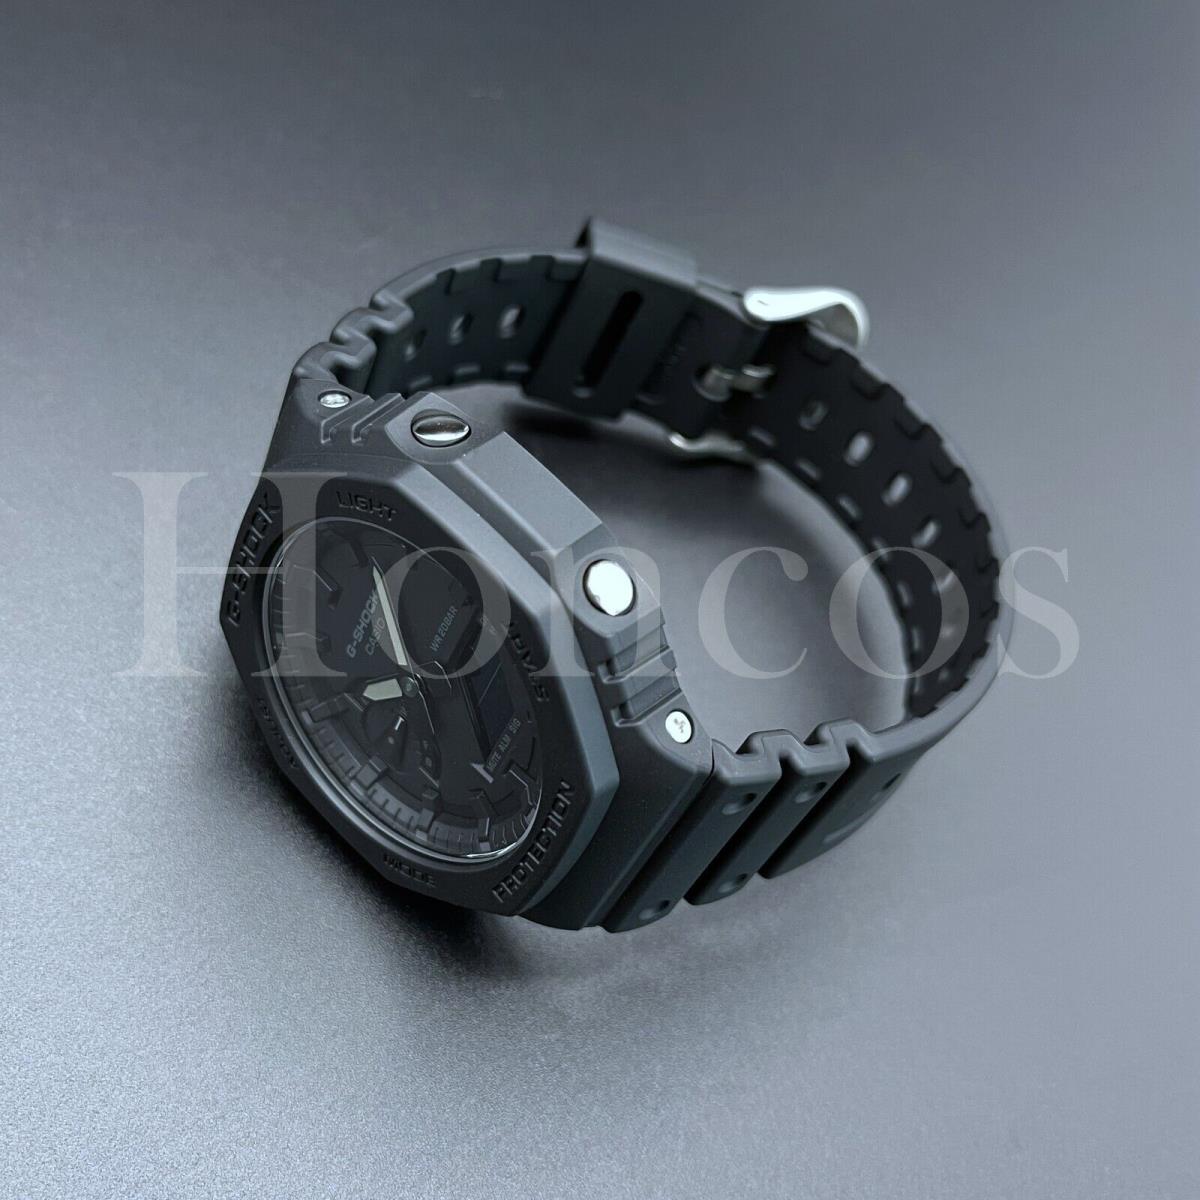 Casio watch  - Black Dial, Black Band, Black Bezel